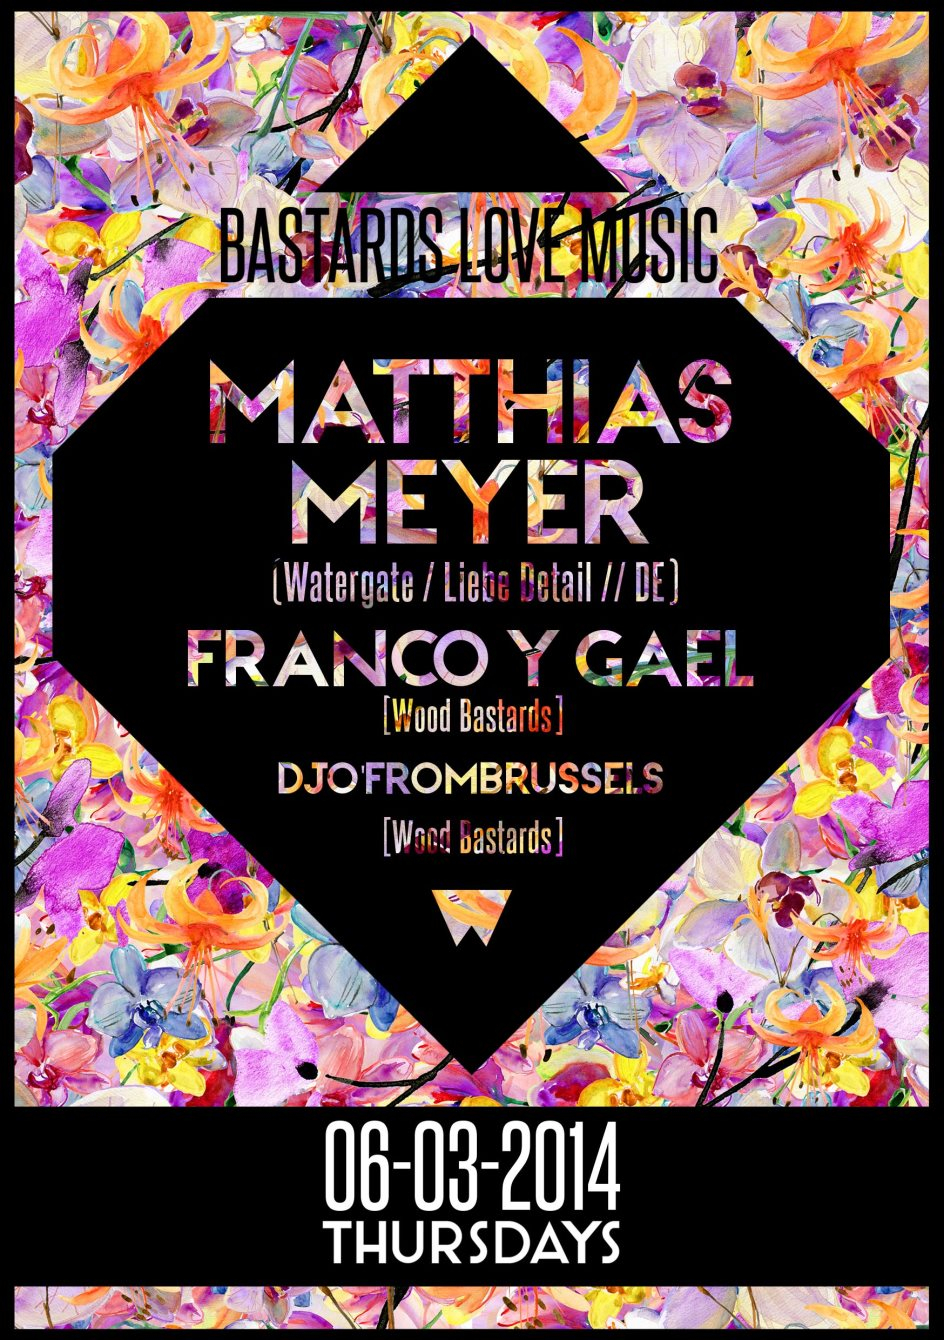 Bastards Love Music with Matthias Meyer - Flyer front